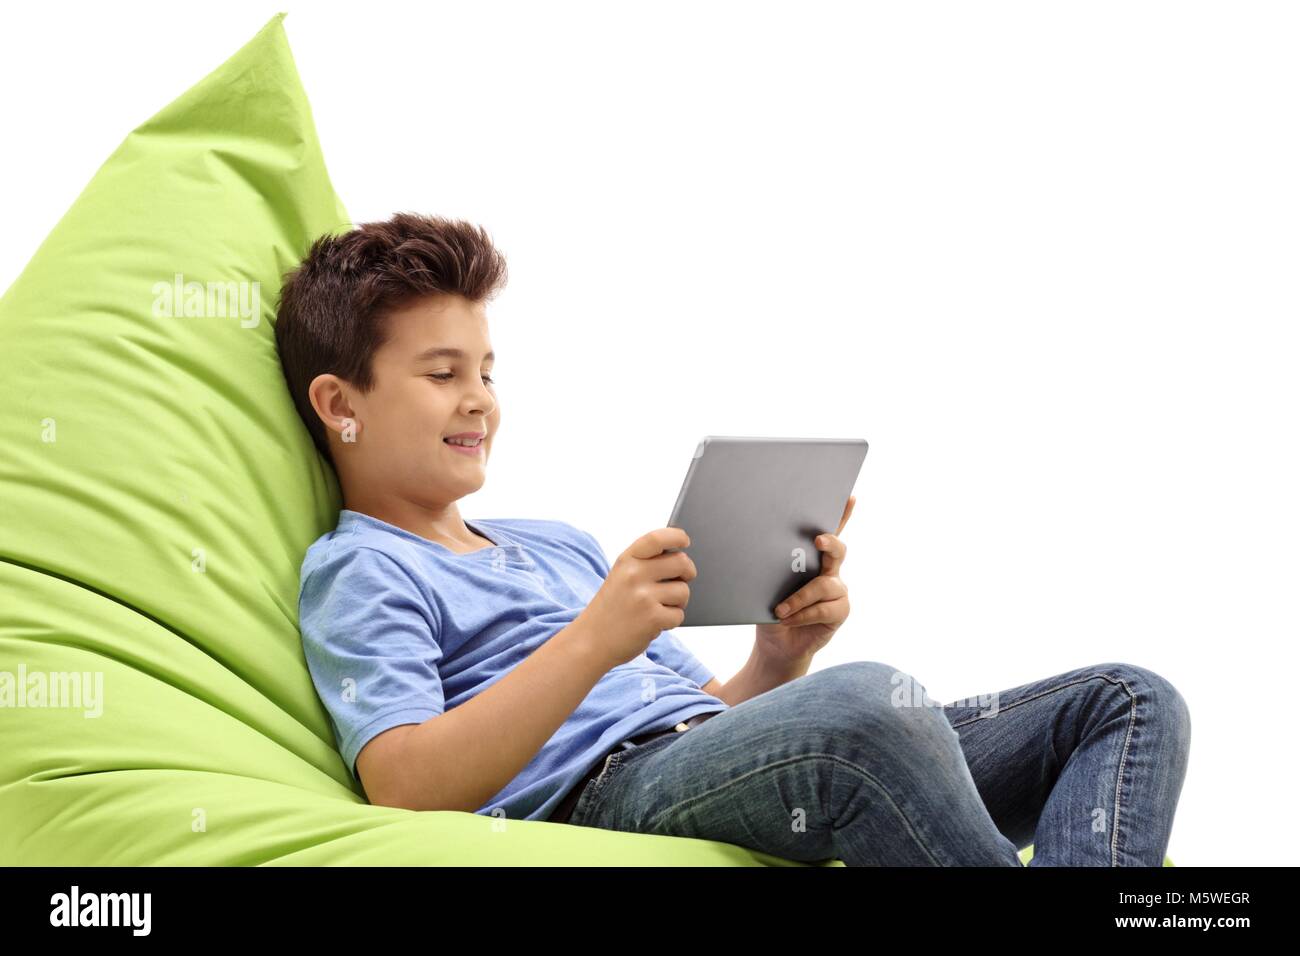 Ragazzo seduto su un verde beanbag utilizzando un tablet isolati su sfondo bianco Foto Stock